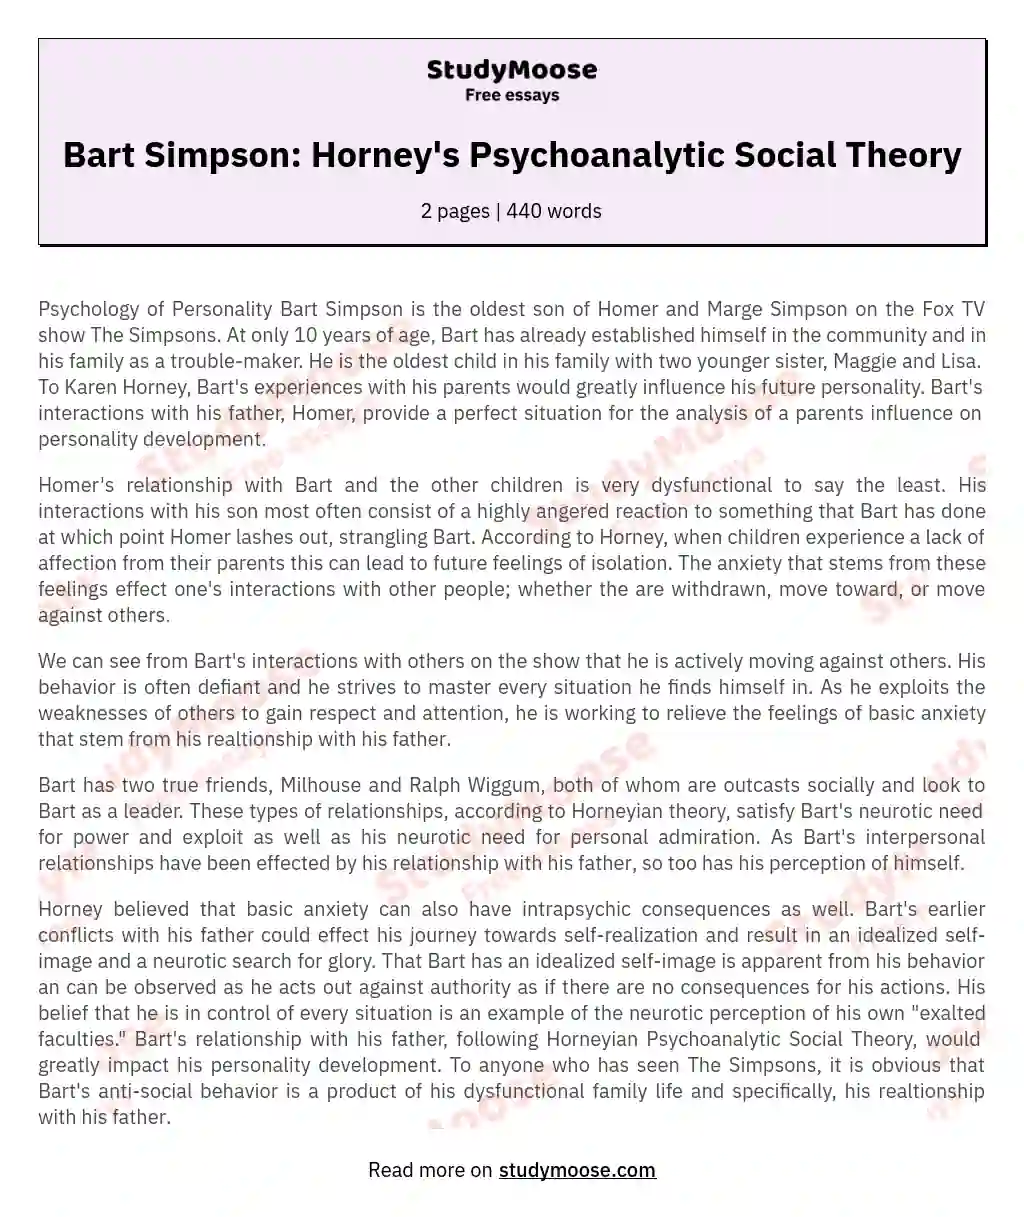 Bart Simpson: Horney's Psychoanalytic Social Theory essay